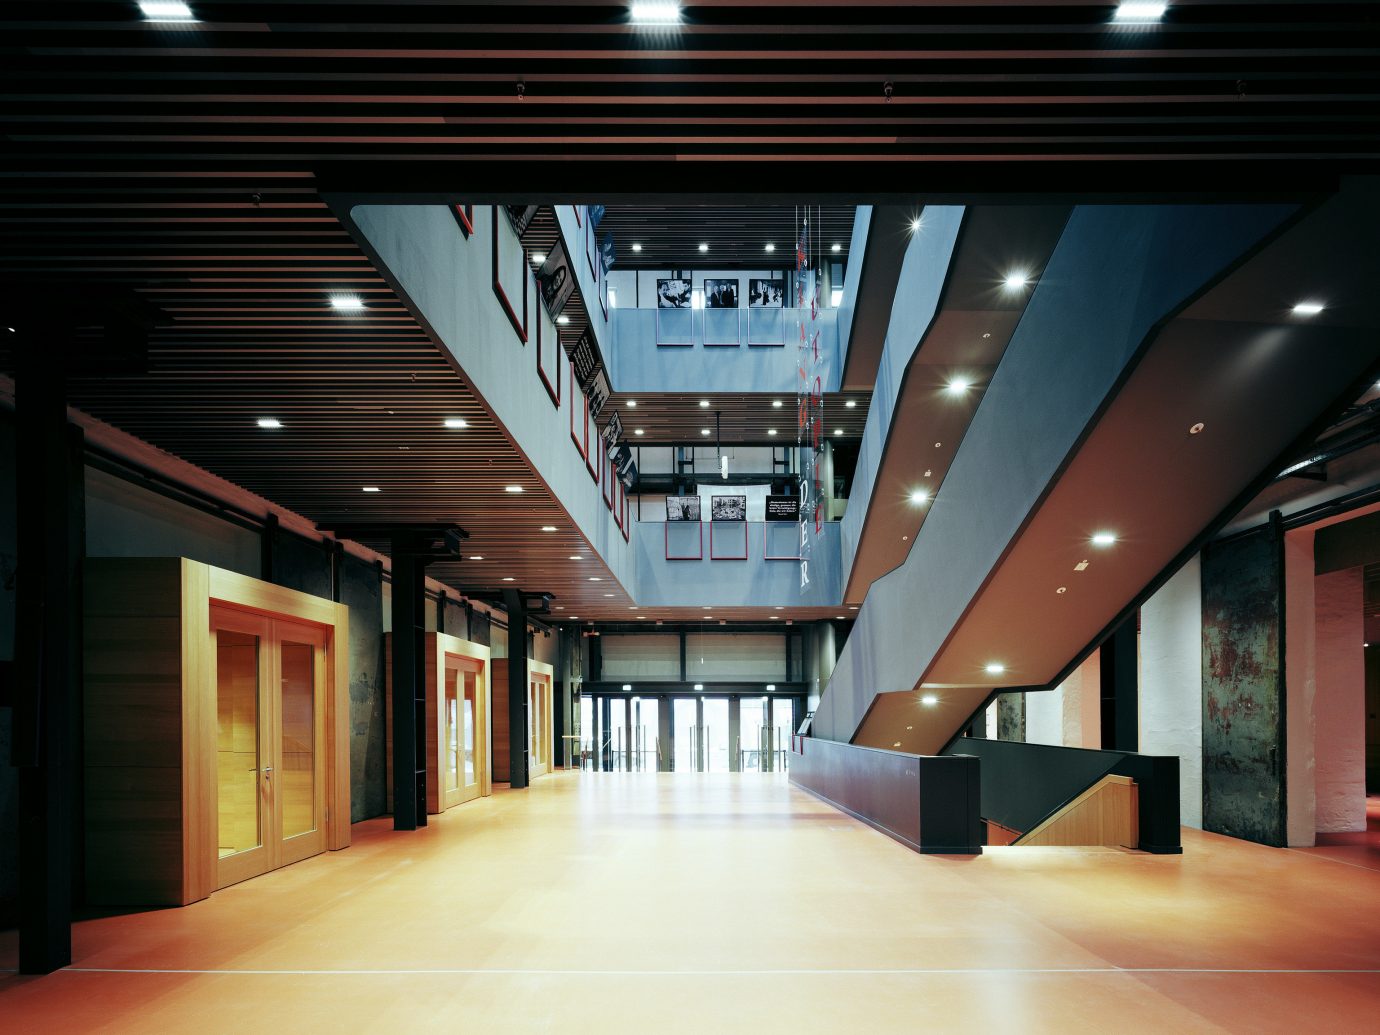 Trip Ideas floor indoor ceiling building Architecture Lobby interior design daylighting platform metropolitan area hall